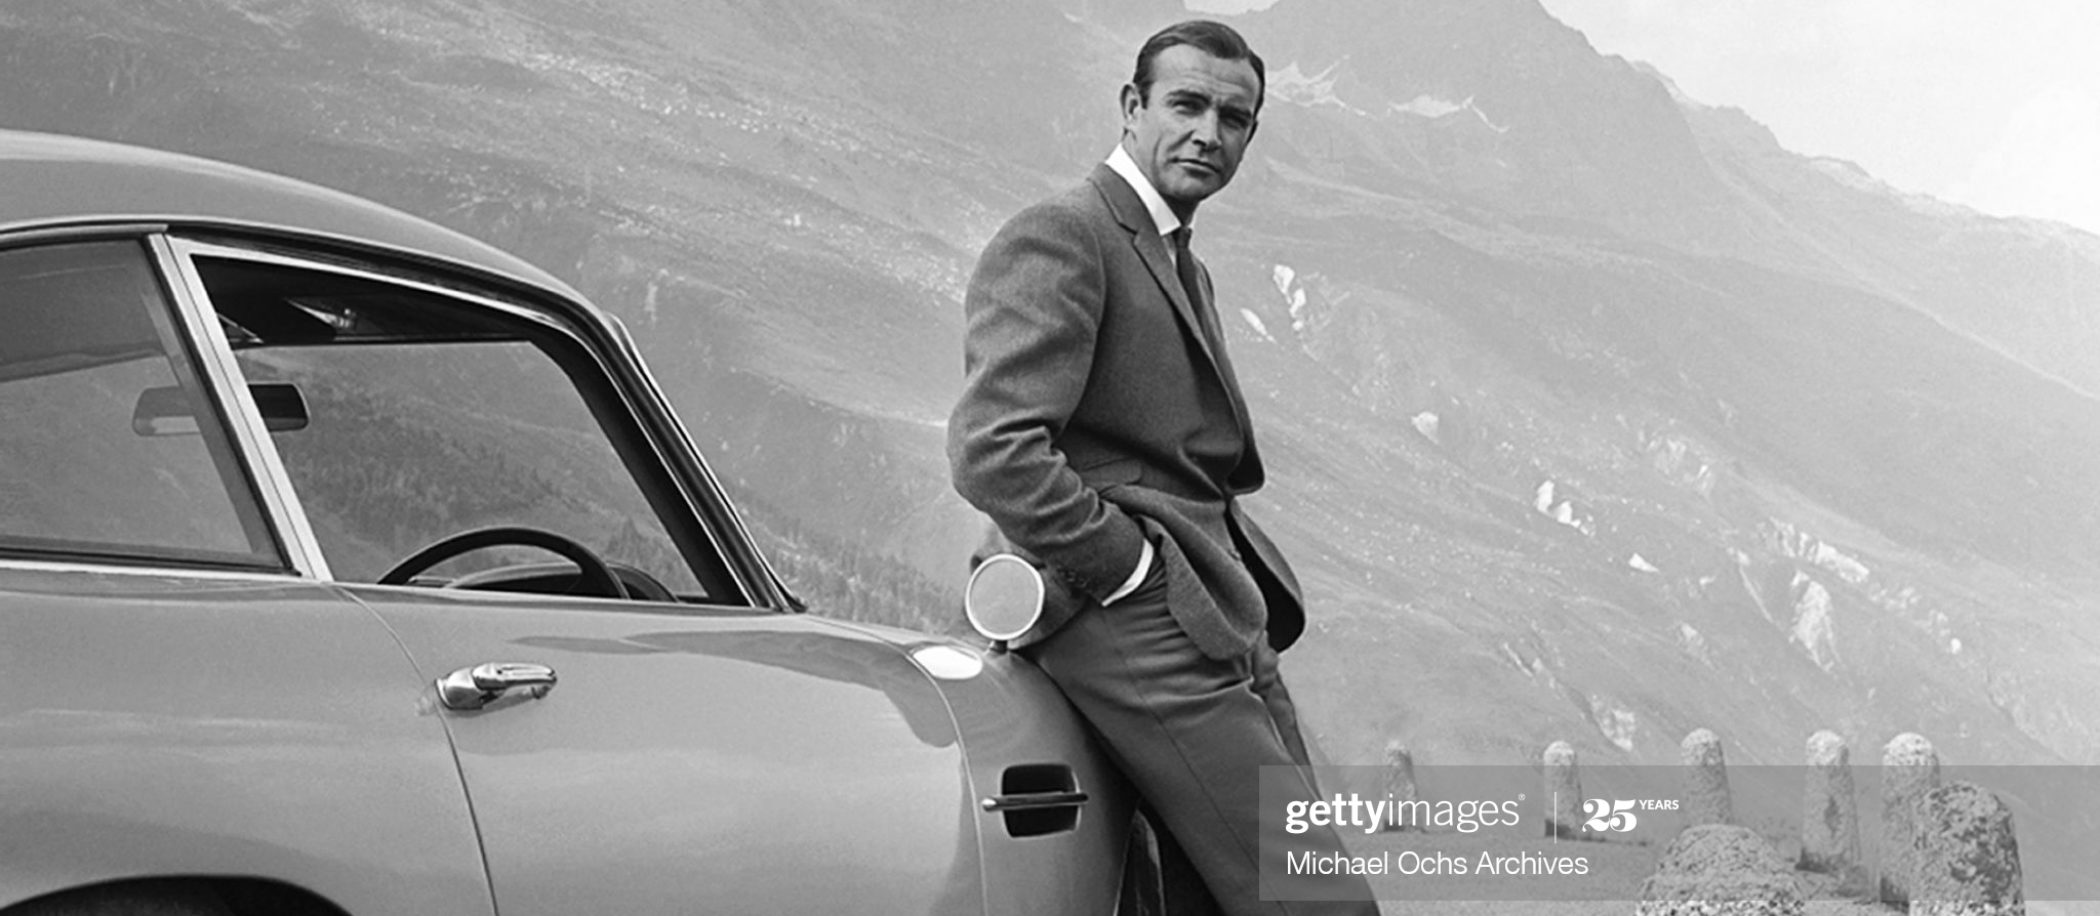 Sean Connery jako James Bond na planie "Goldfingera" / foto: Michael Ochs Archives / Getty Images